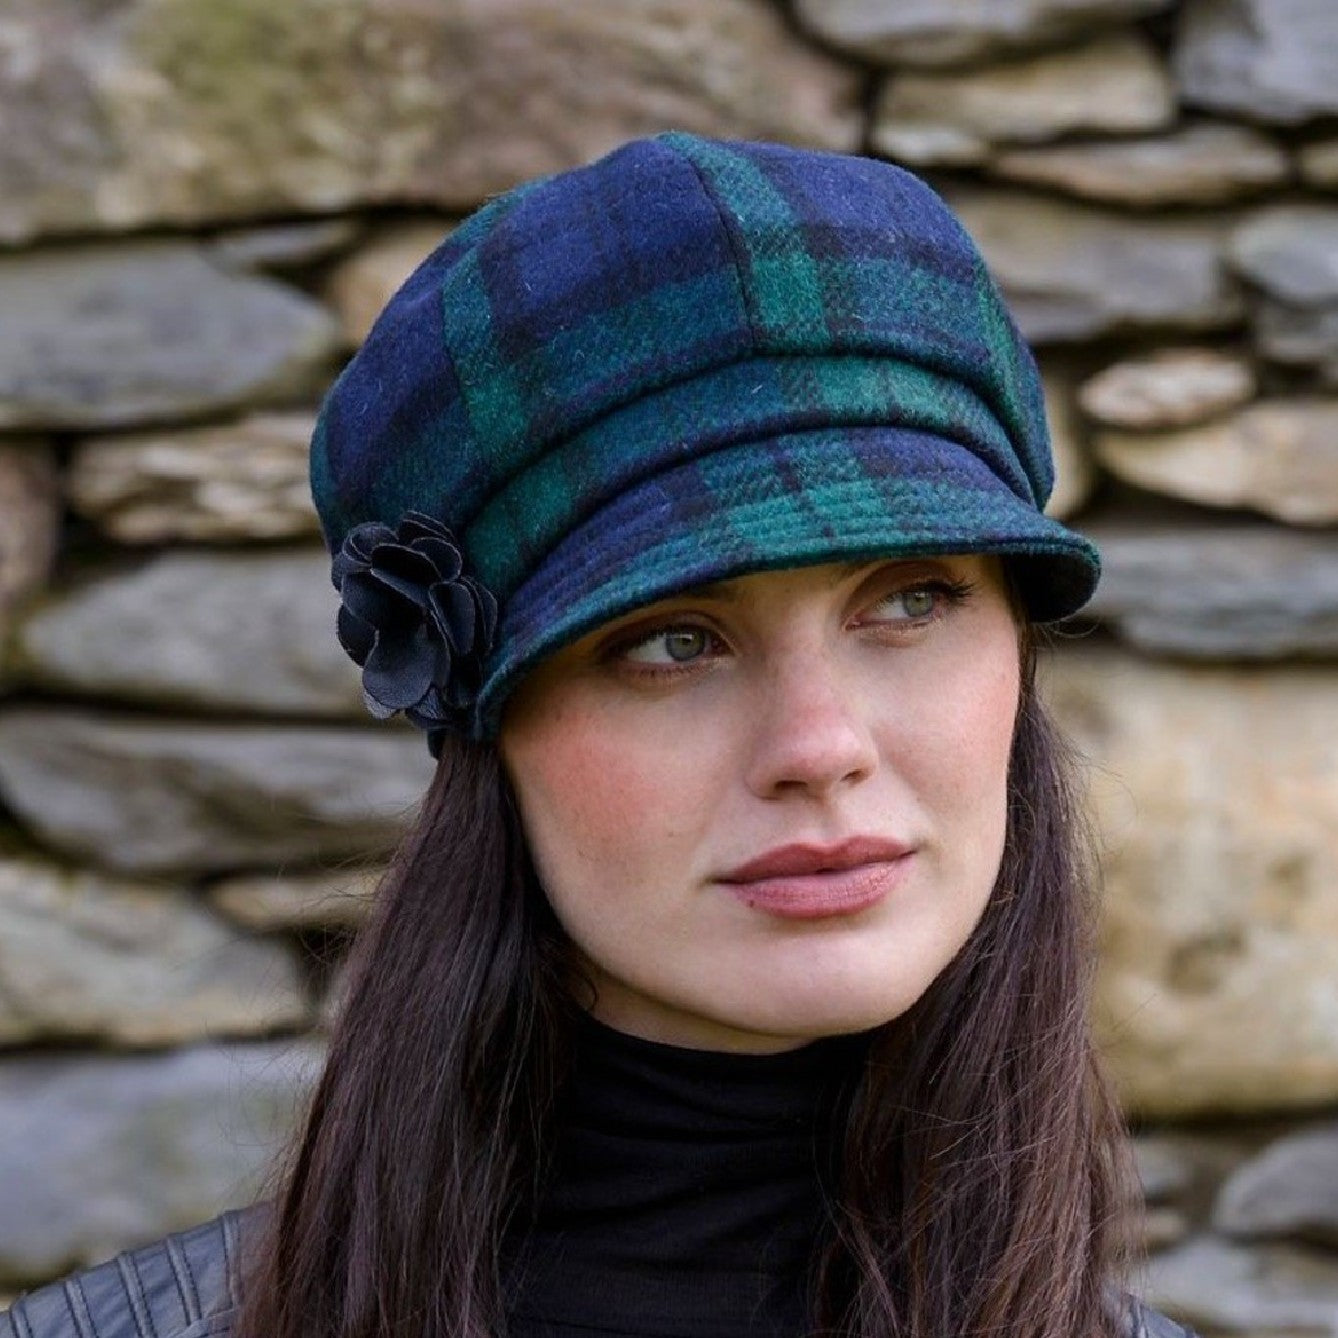 Wool Hats for Women, Irish Knitted Hats